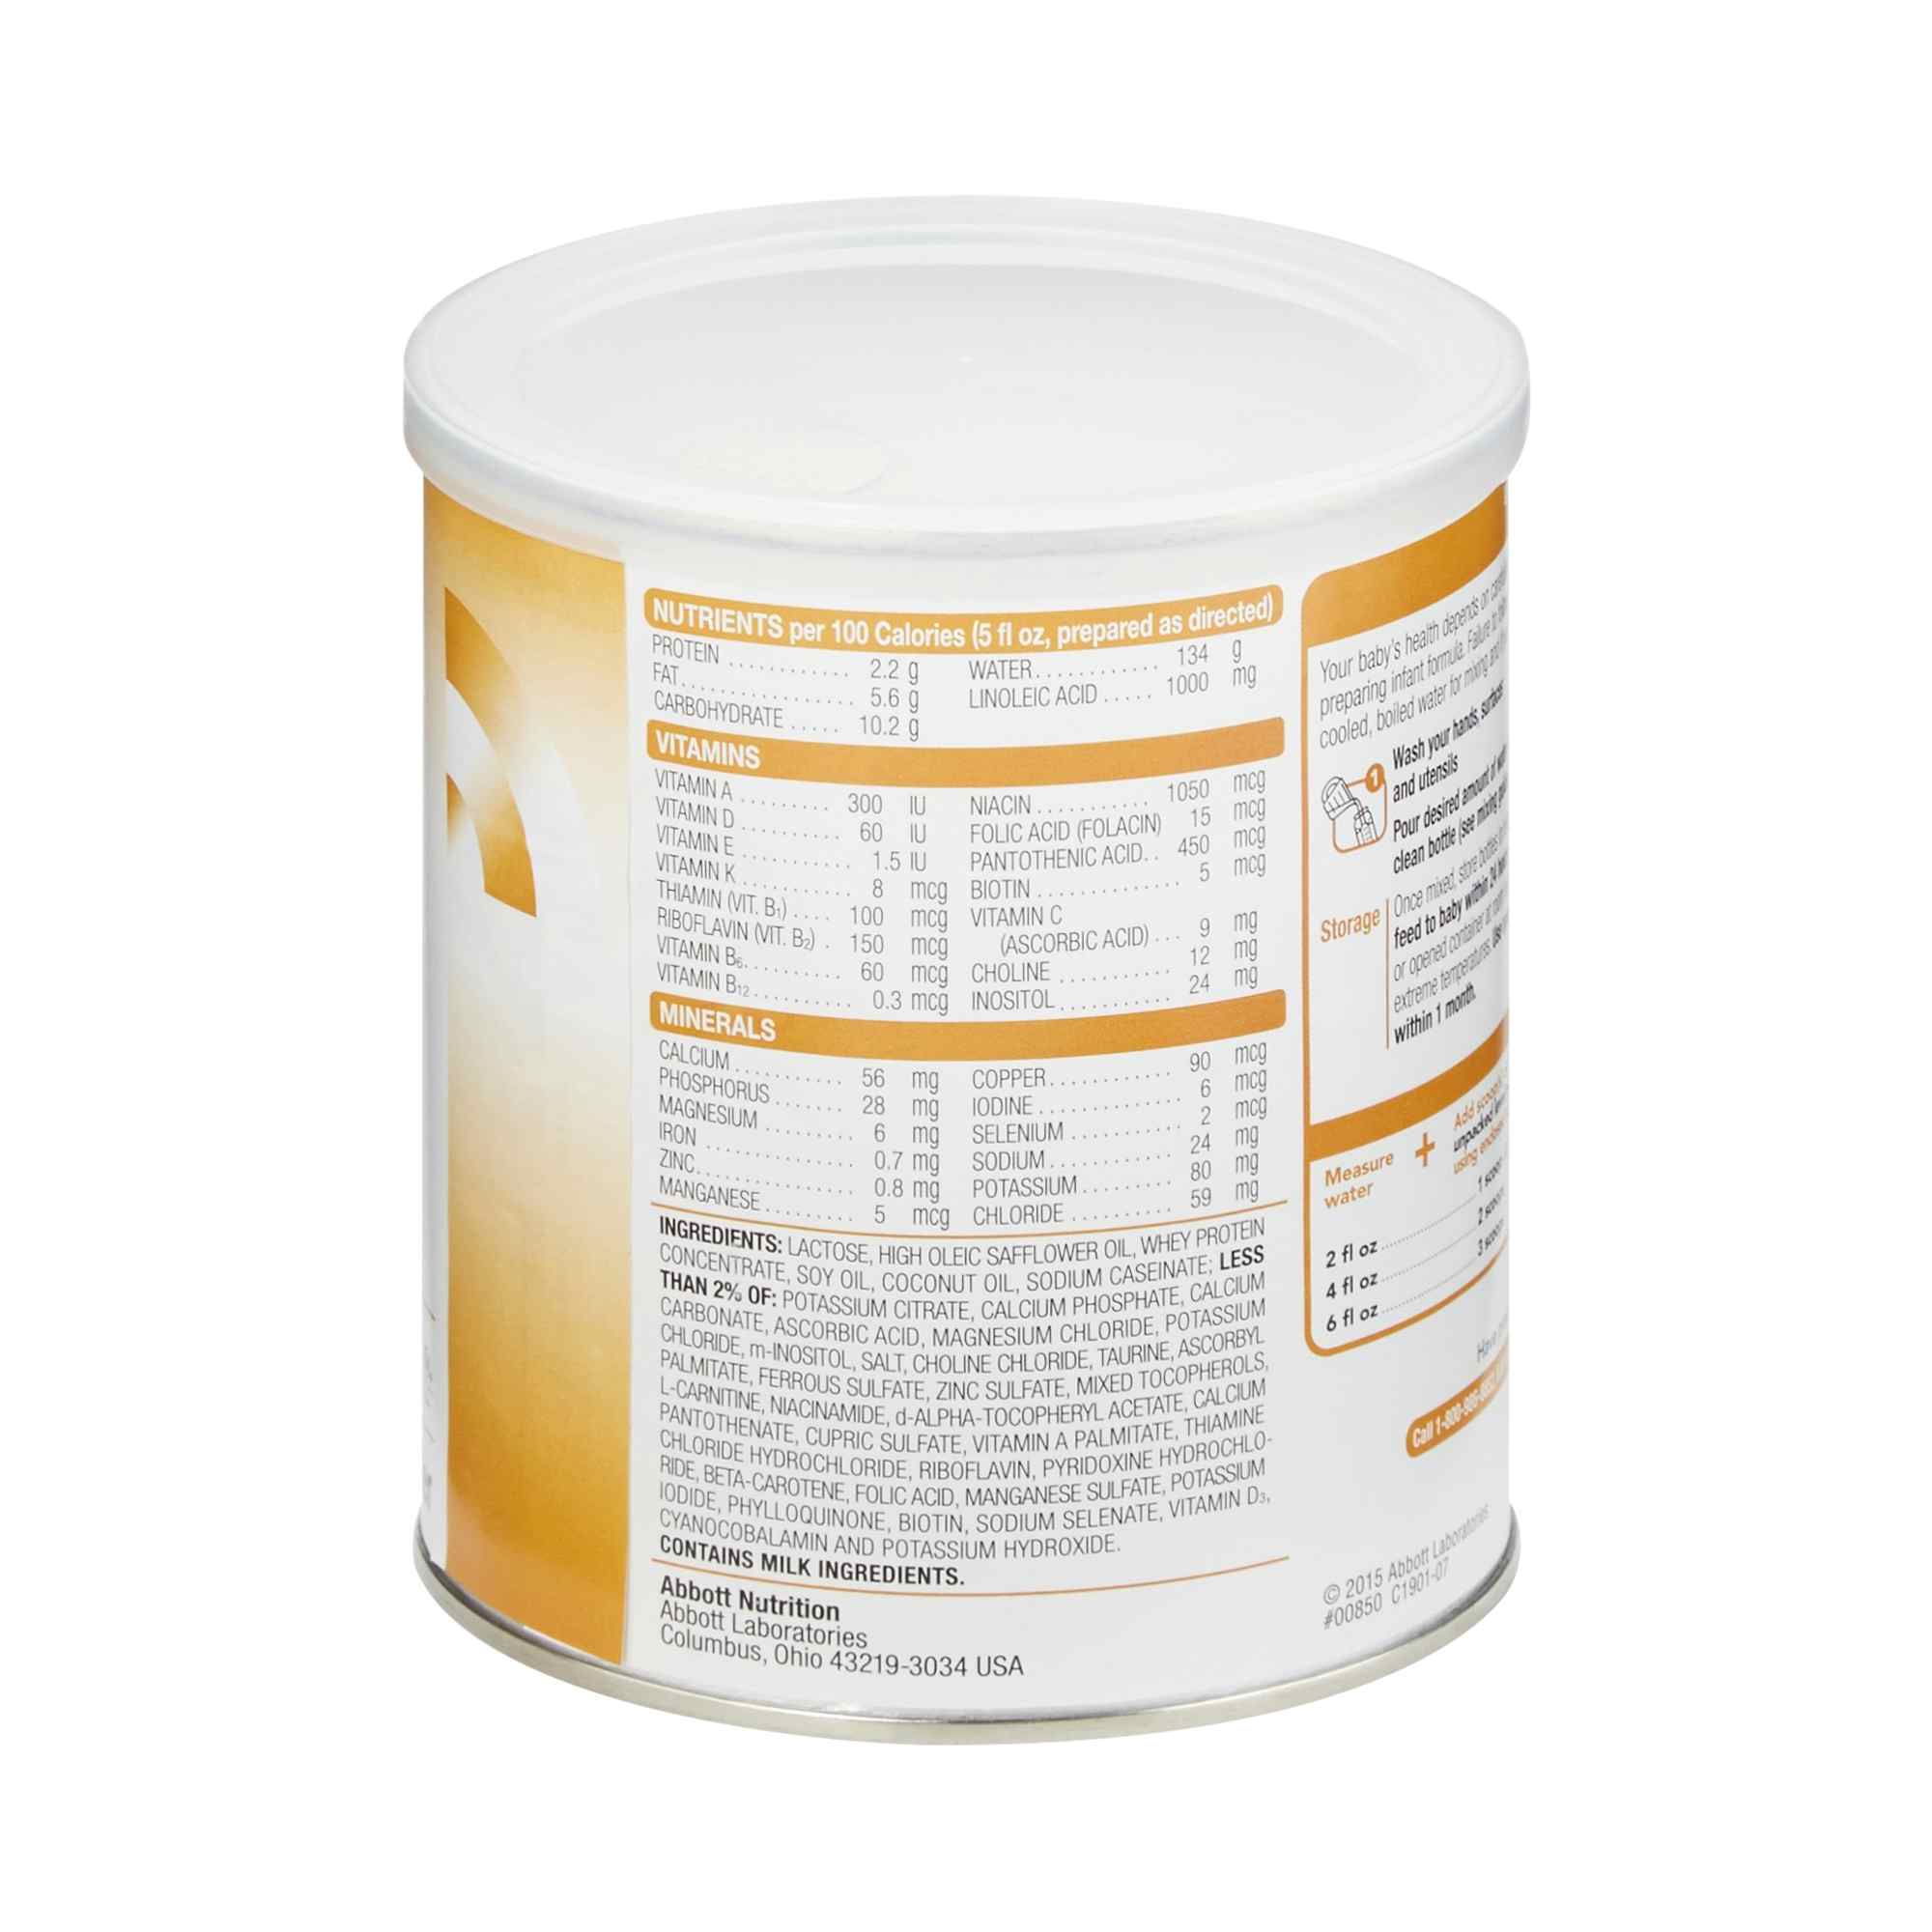  Similac PM Infant Formula Powder, 14.1 oz., Can, 00850, Case of 6 Cans